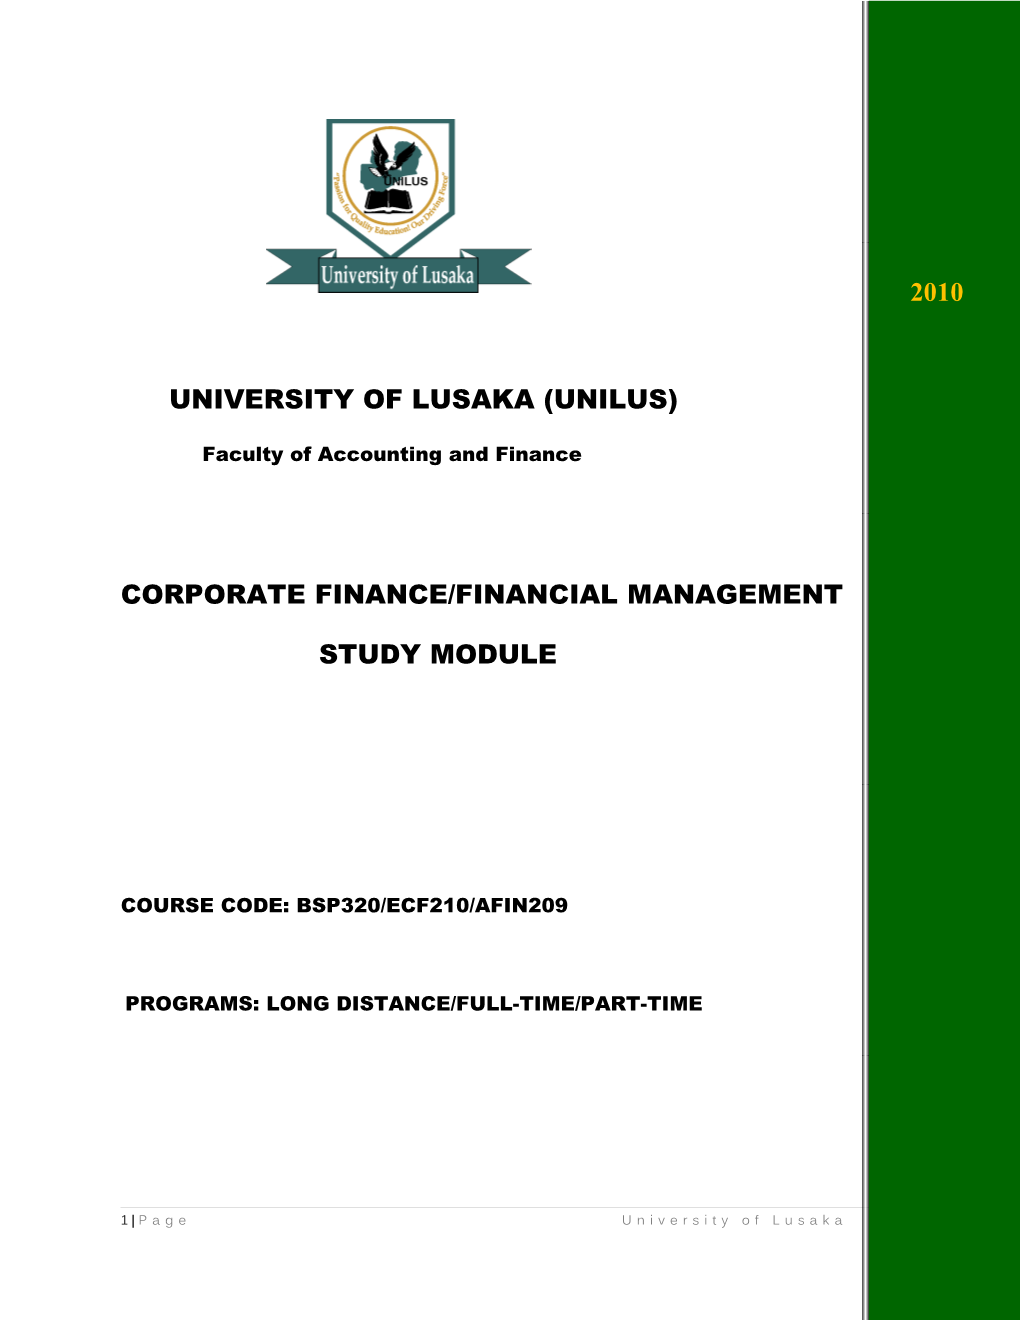 Corporate Finance/Financial Management